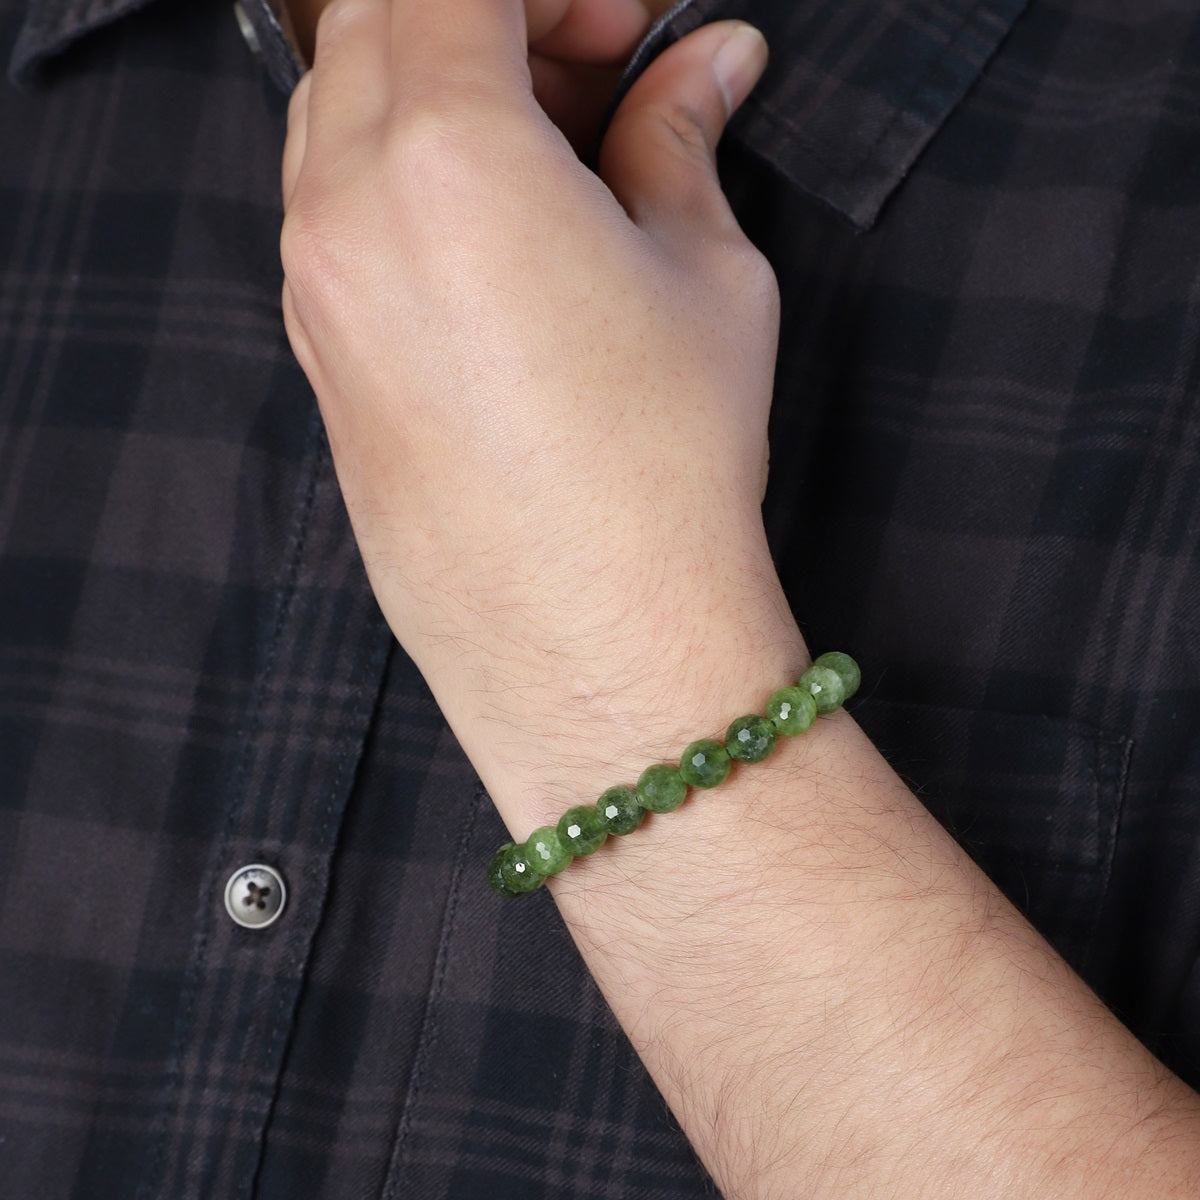 Adorned wrist showcasing the Green Quartz Bracelet, a stylish accessory that enhances vibrancy and positive energy